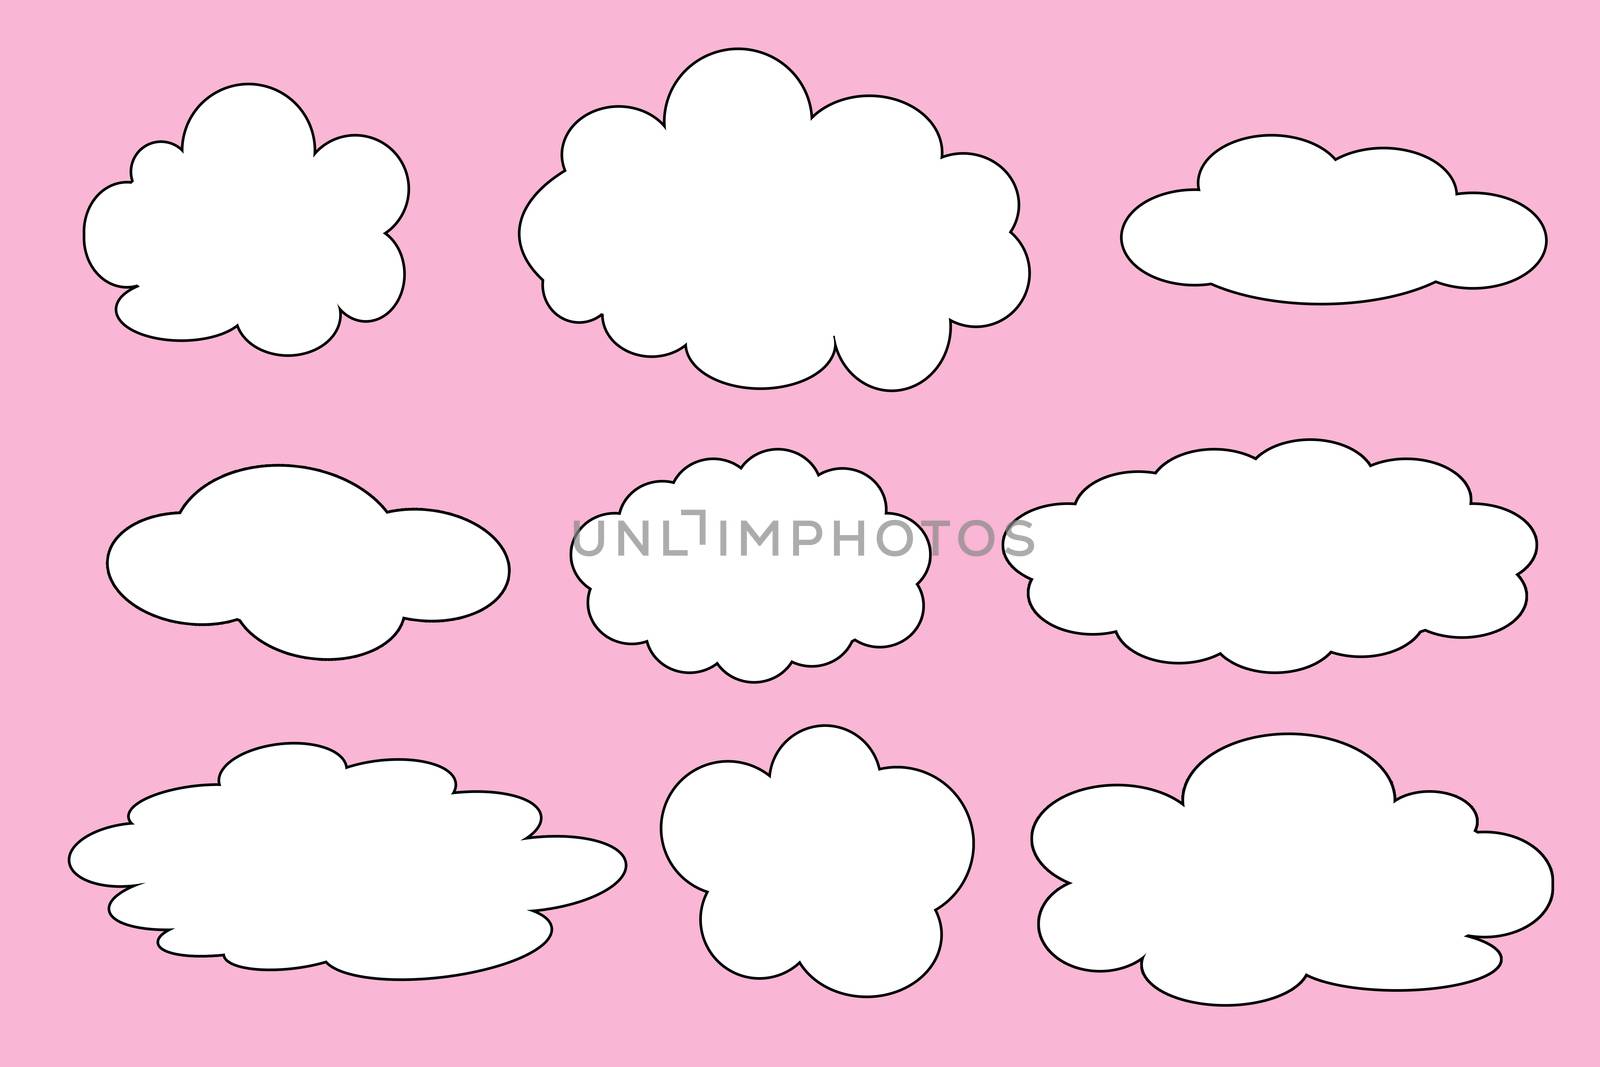 Set of different clouds illustration on pink background